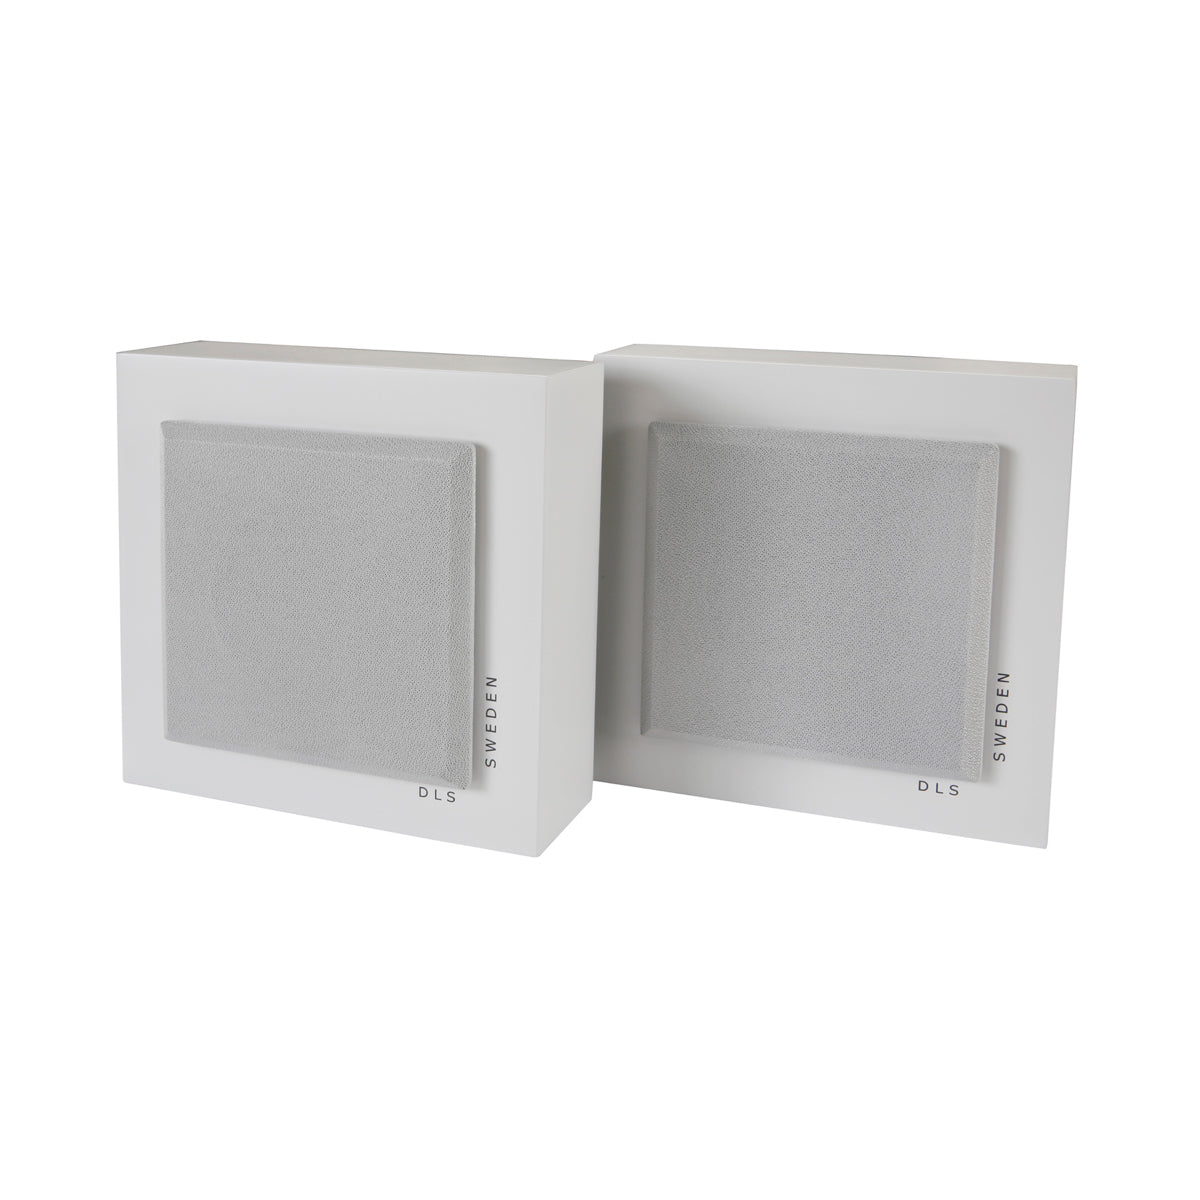 DLS Flatbox Slim Mini On wall speaker - Pair - AVStore